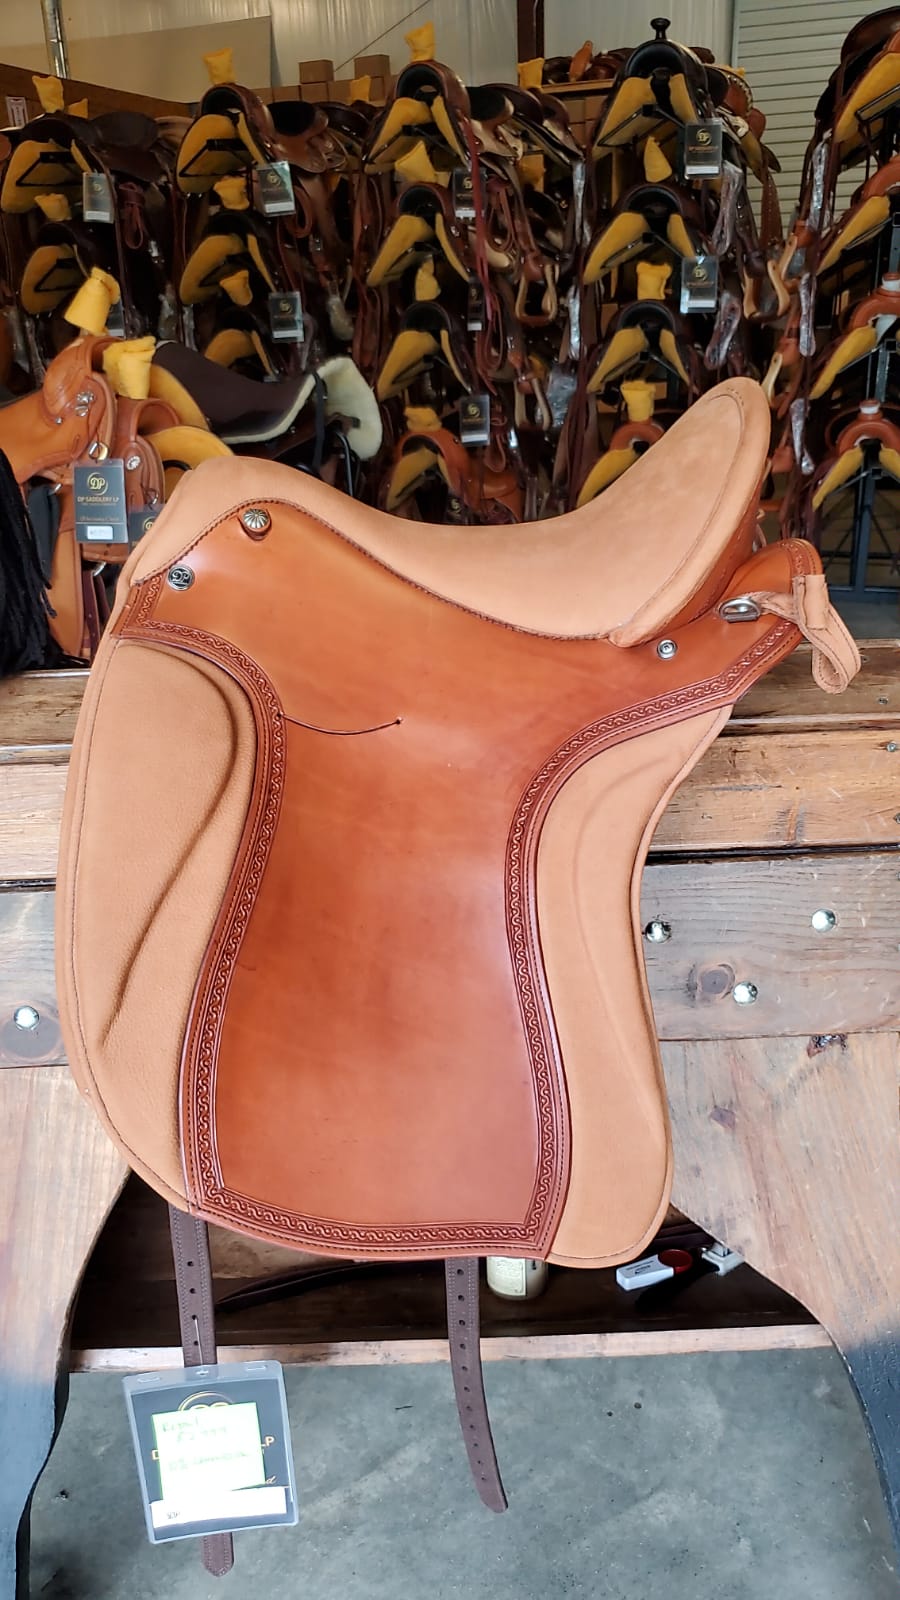 Side view of saddle on saddle rack